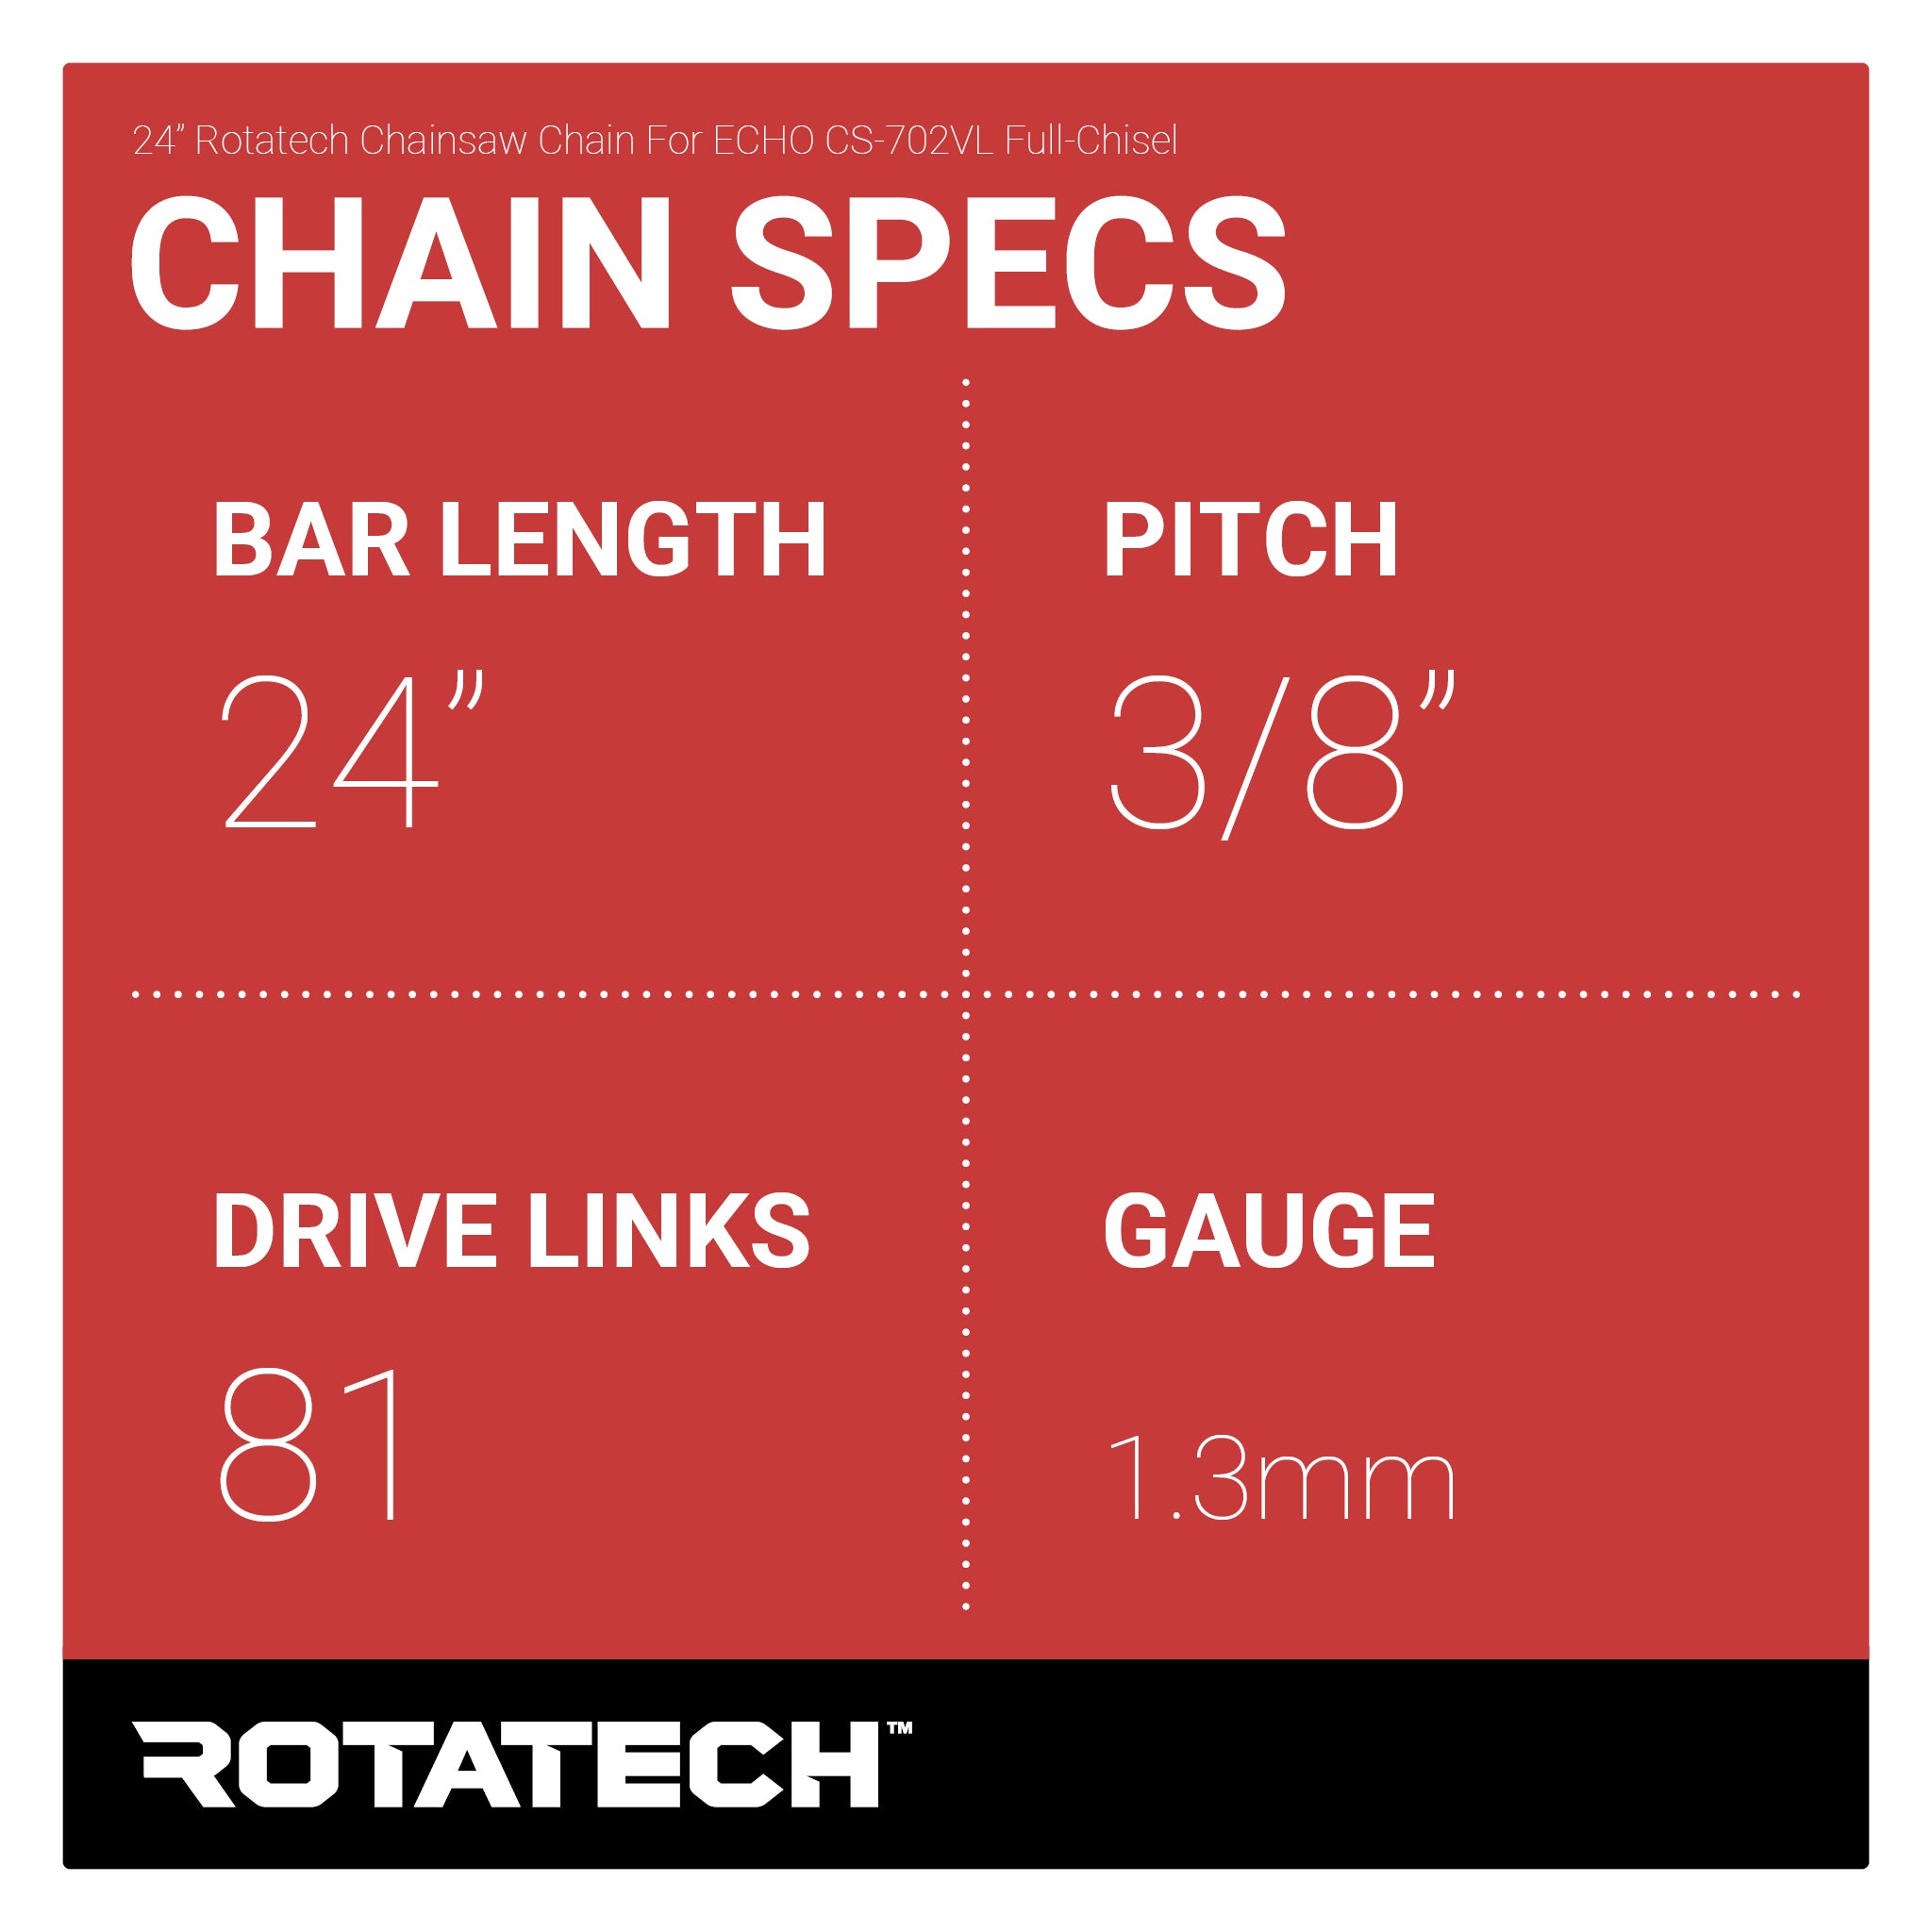 24" Rotatech Chainsaw Chain For ECHO CS-702VL Full-Chisel Chain Specs